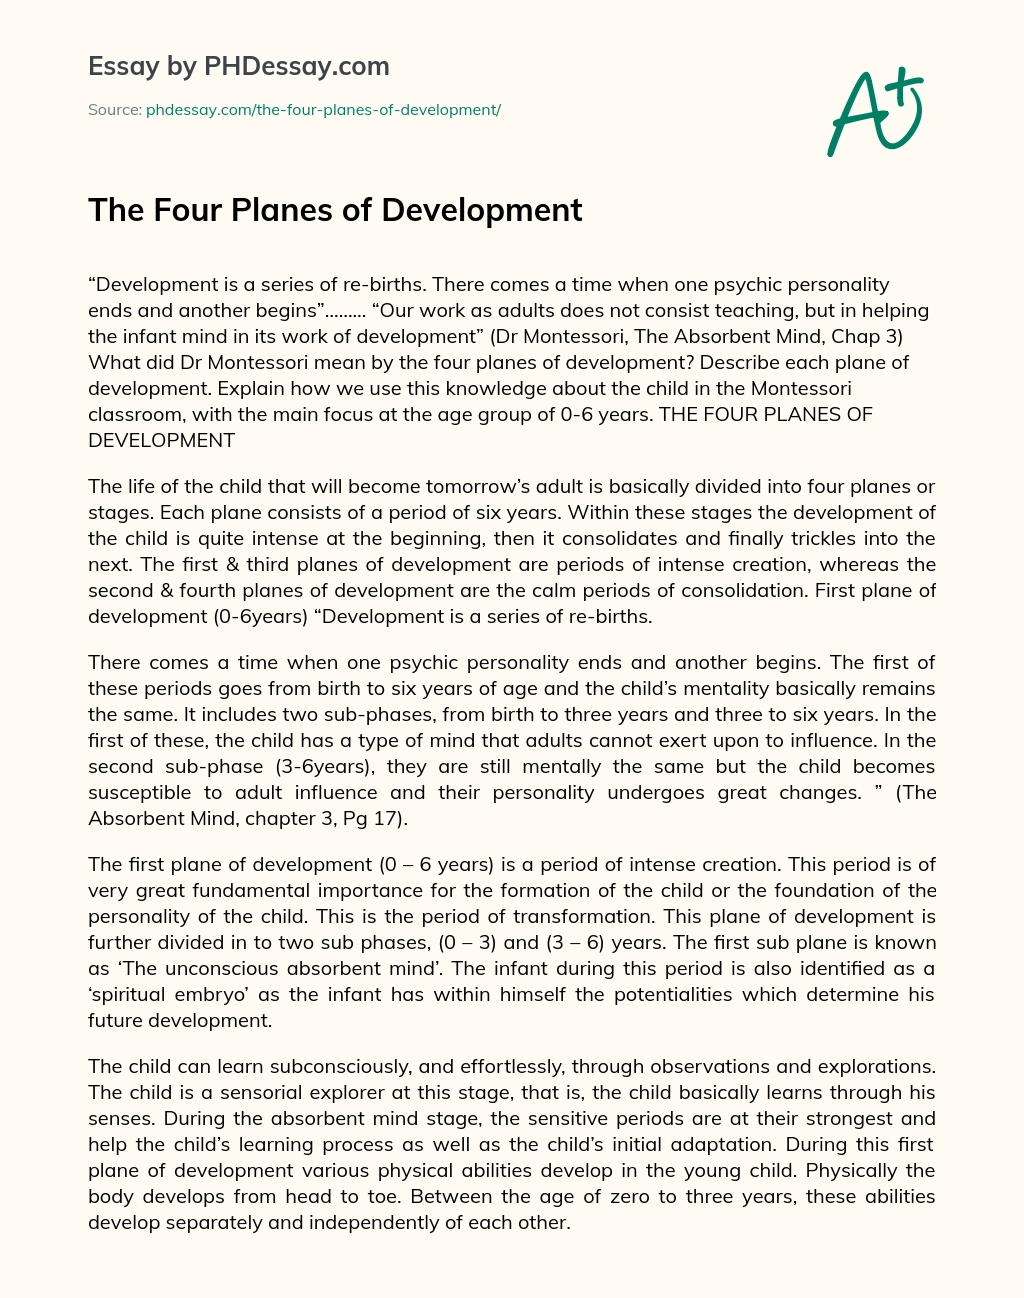 The Four Planes of Development essay